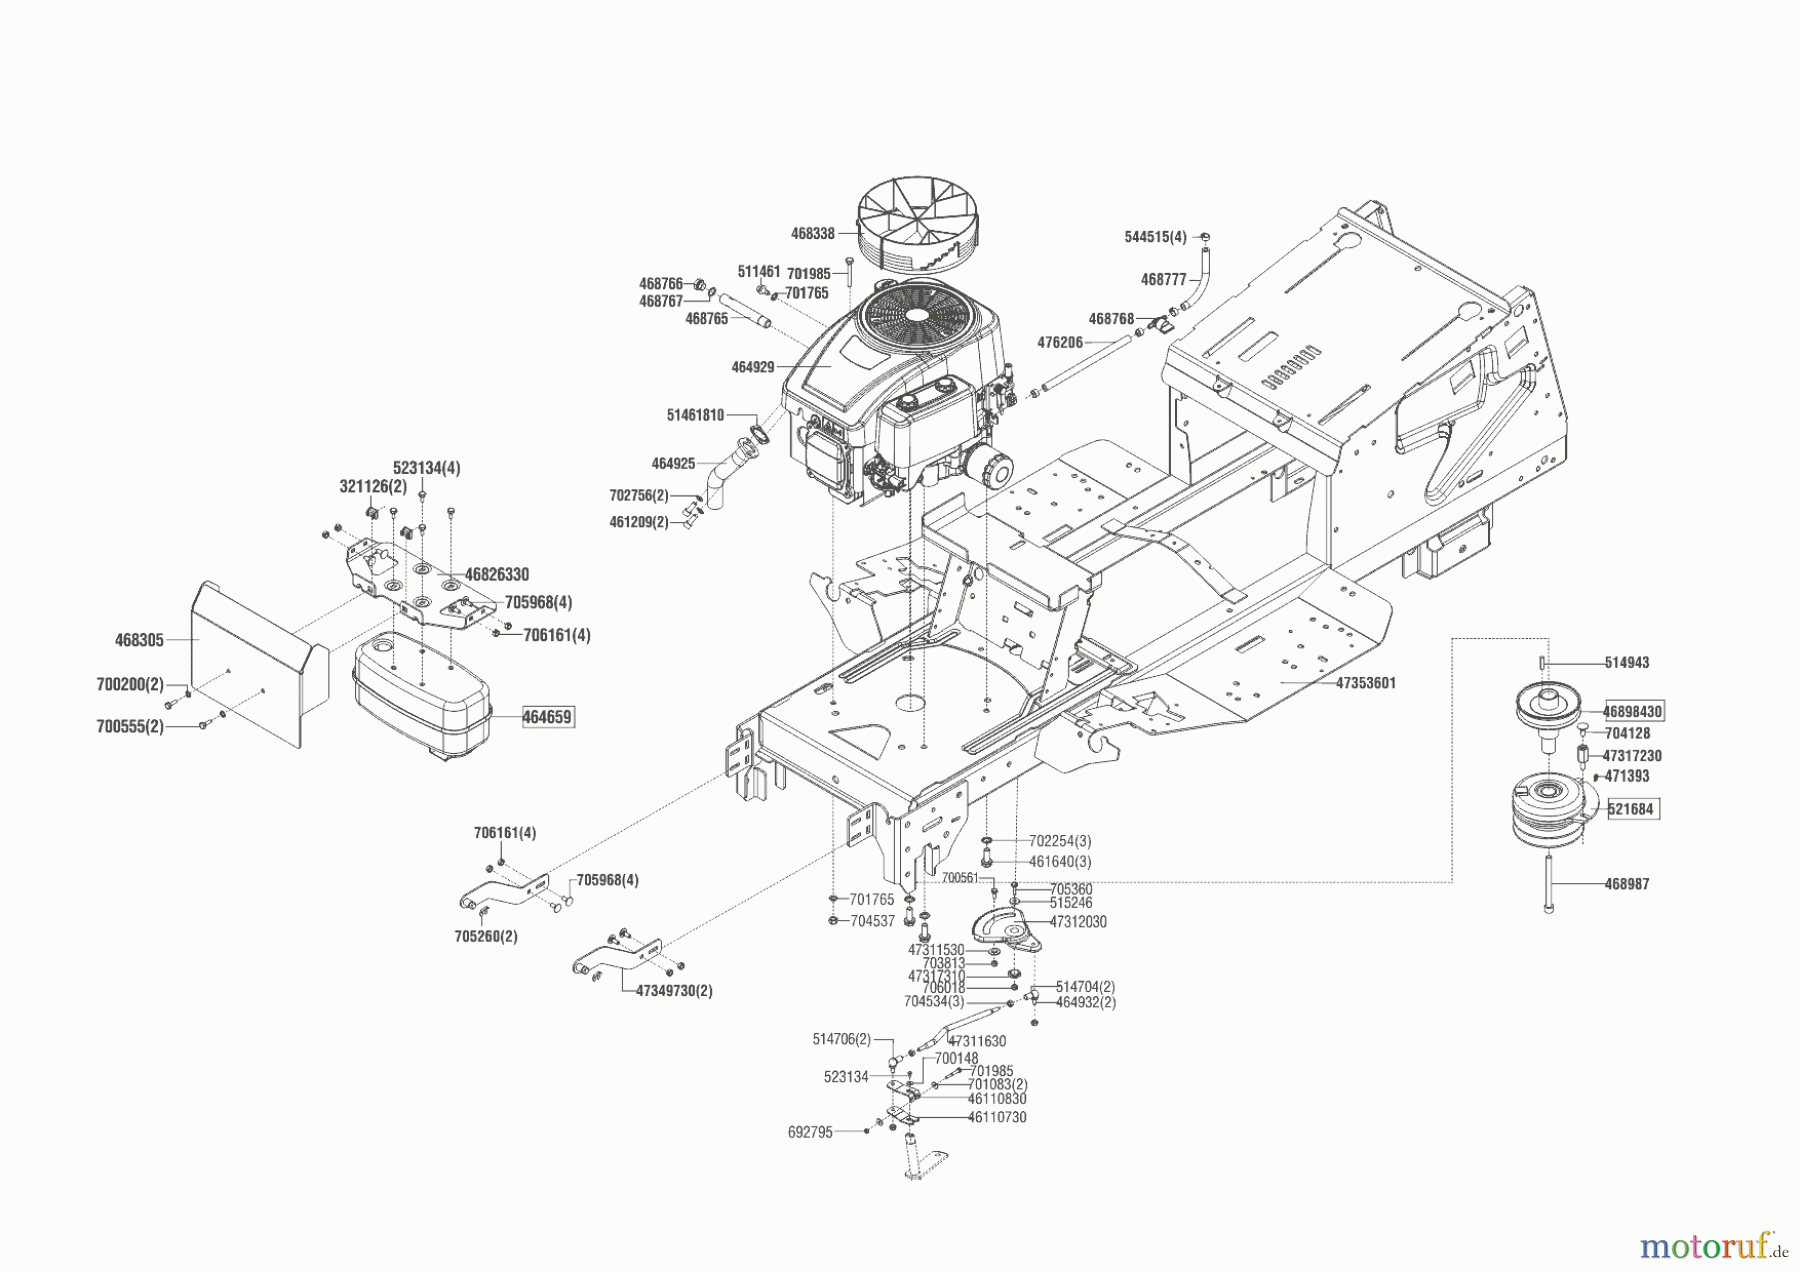  Powerline Gartentechnik Rasentraktor T 15-95.4 HD-A  03/2016 - 09/2016 Seite 2